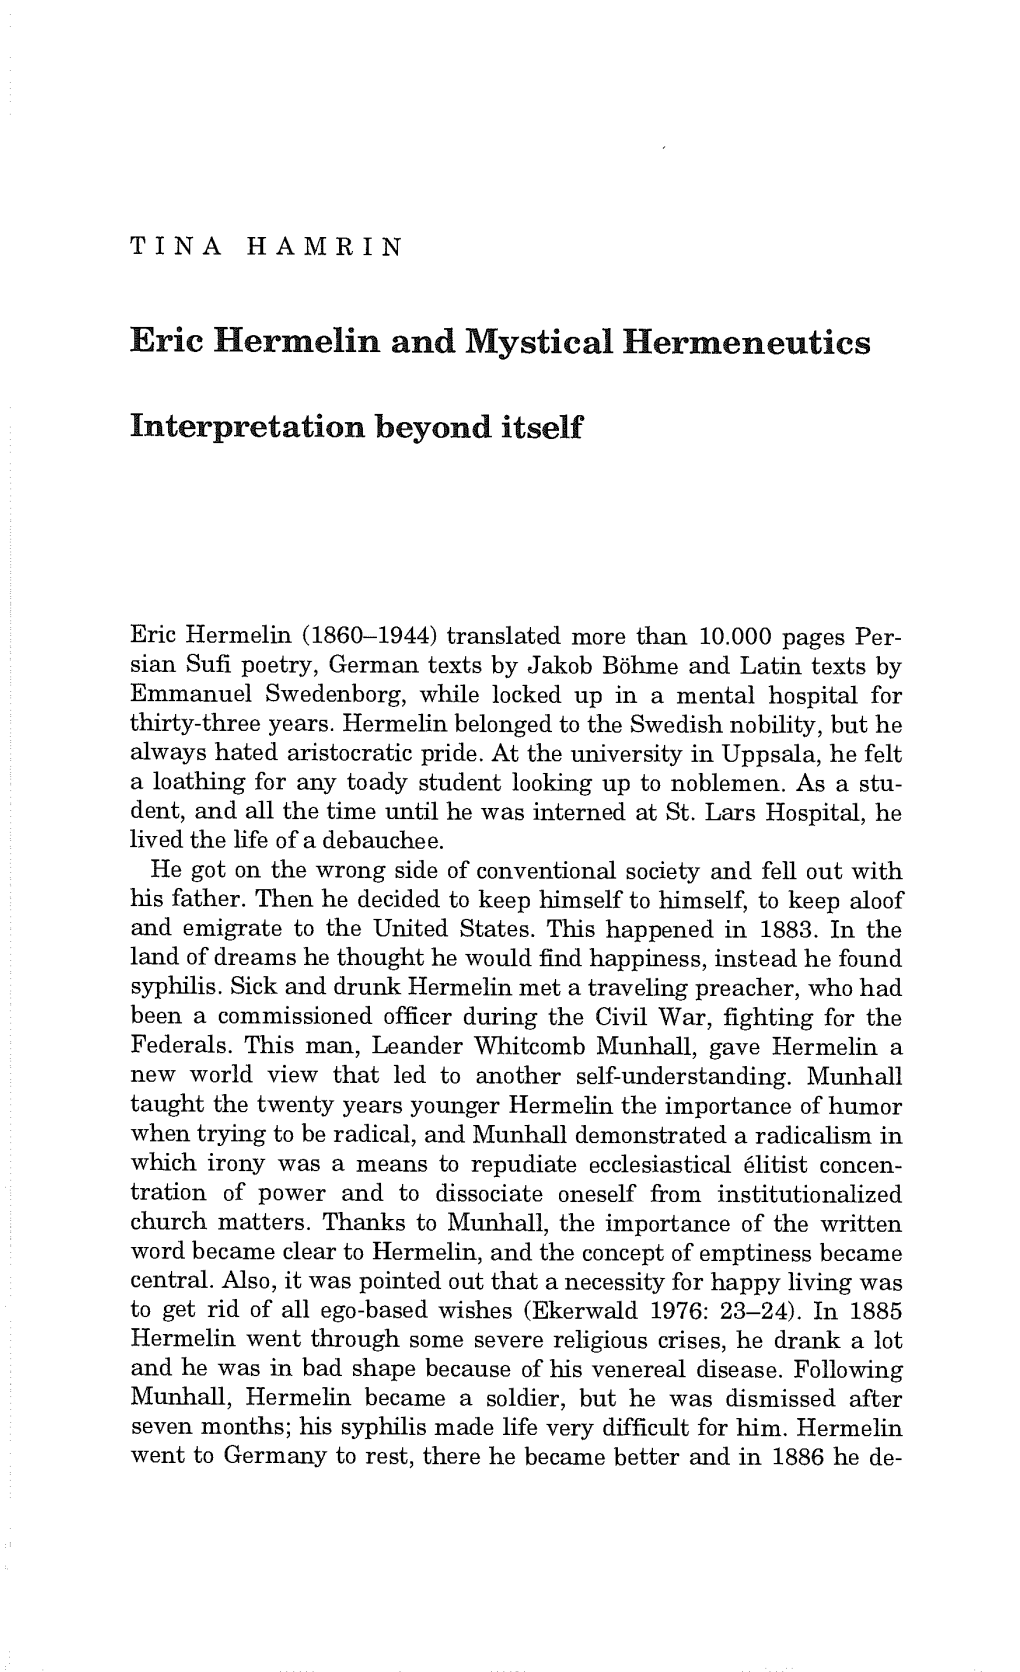 Eric Hermelin and Mystical Hermeneutics